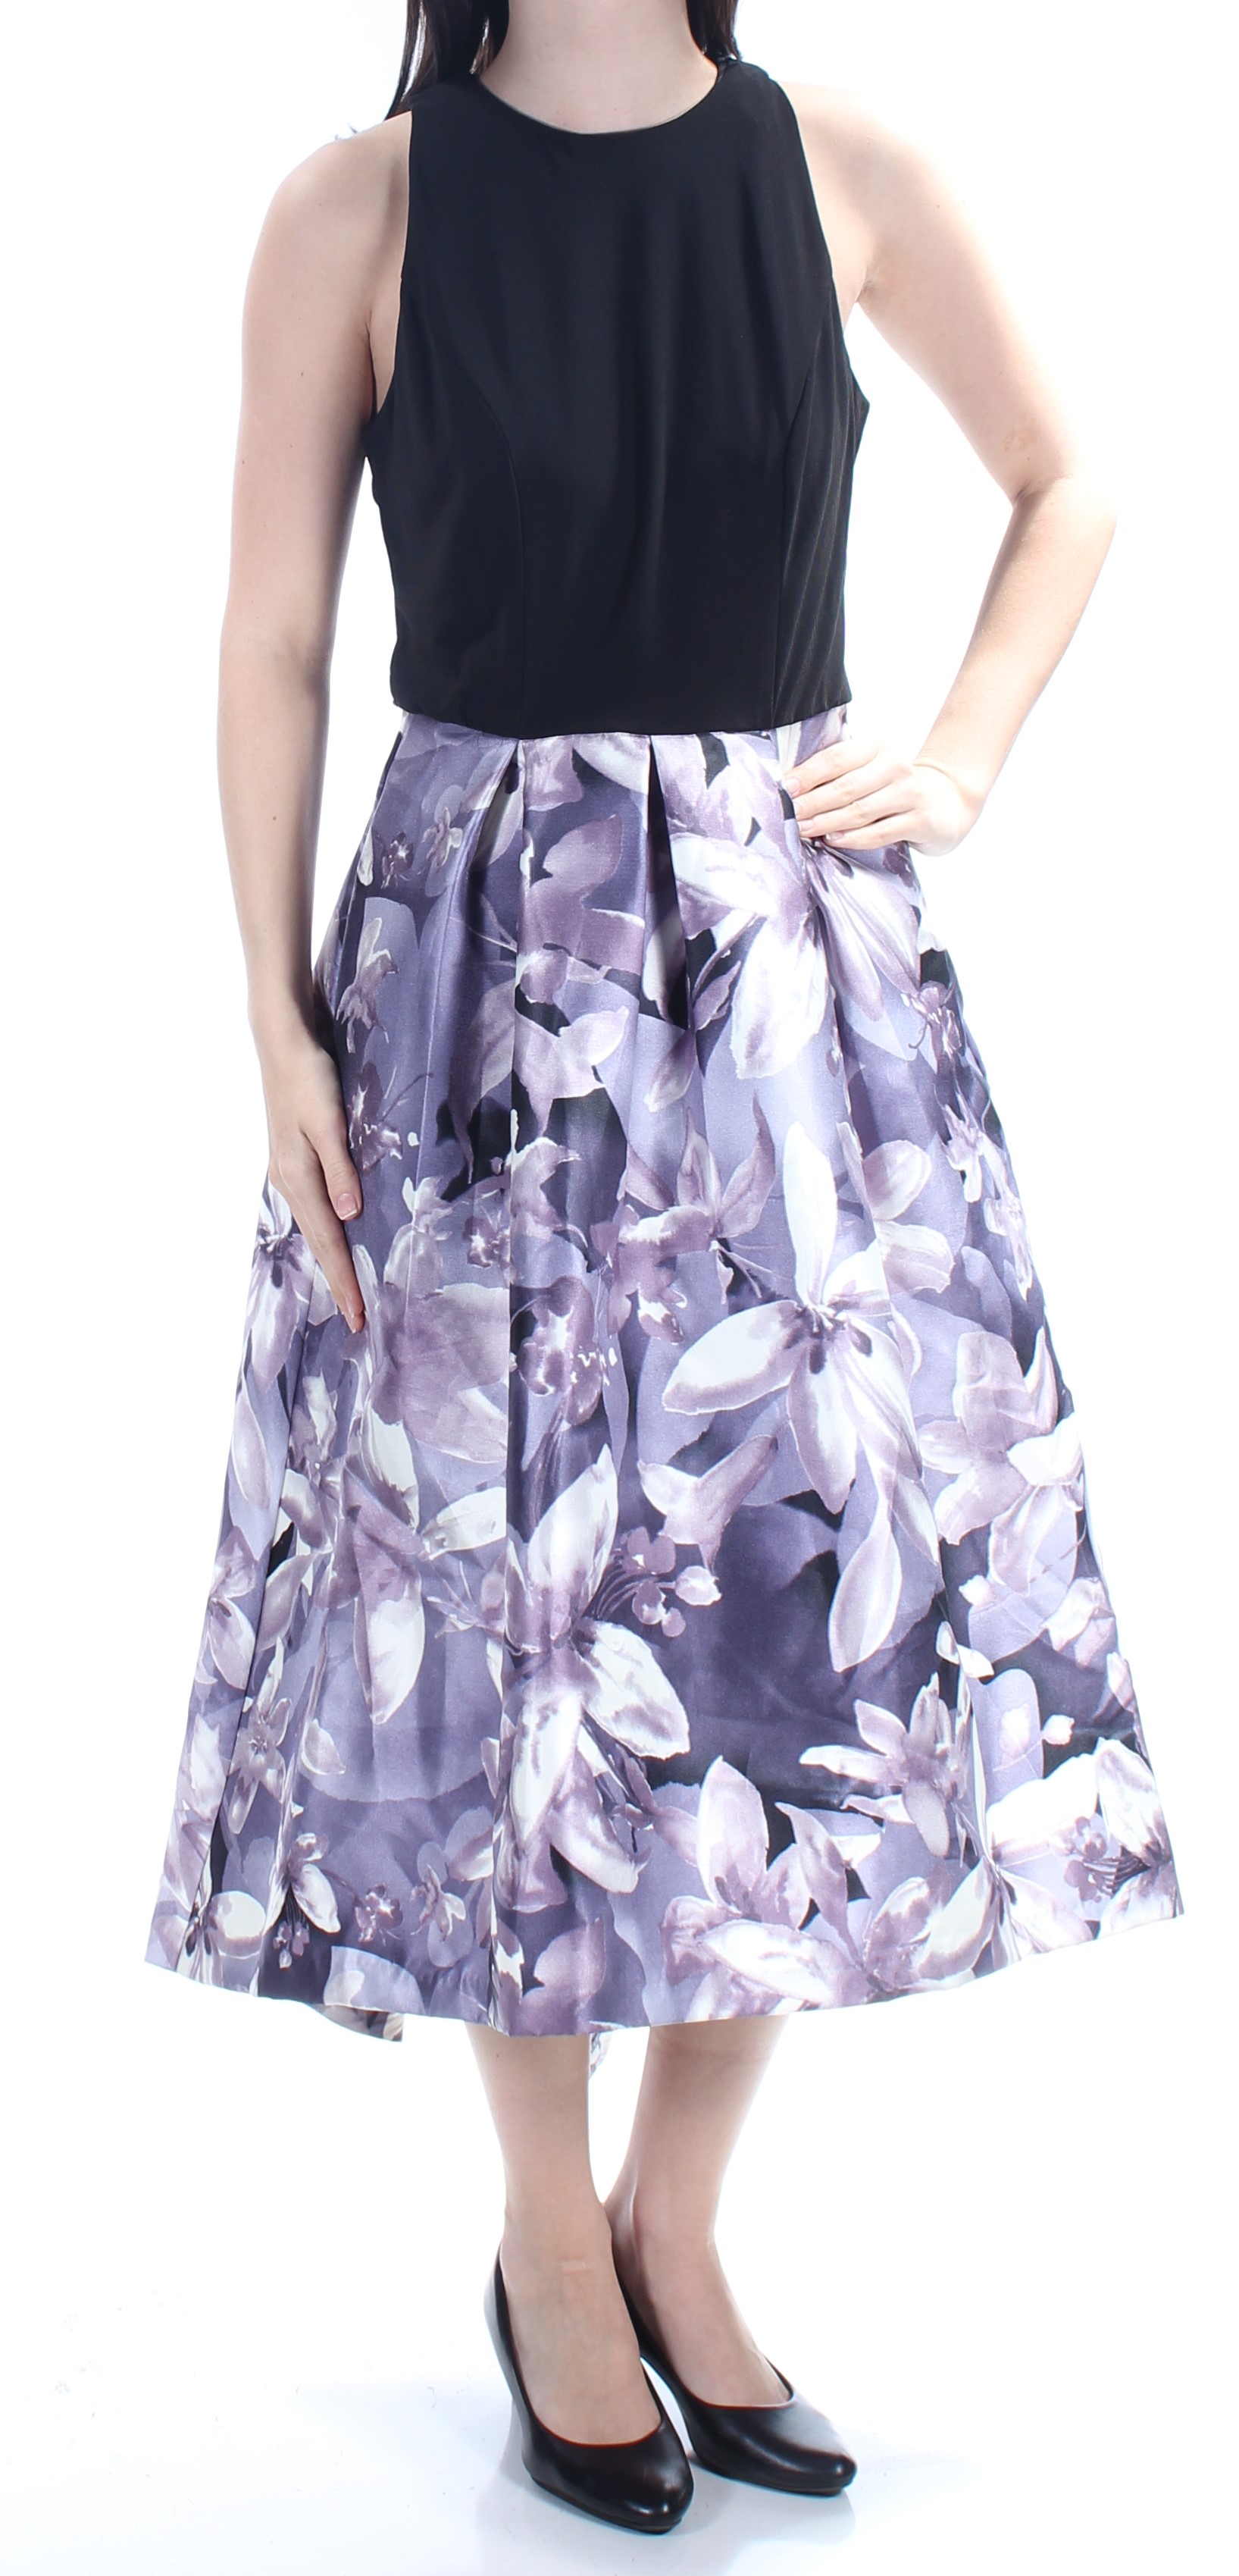 SLNY $119 Womens New 1432 Purple Floral Tea-Length Fit + Flare Dress 10 B+B - image 1 of 2